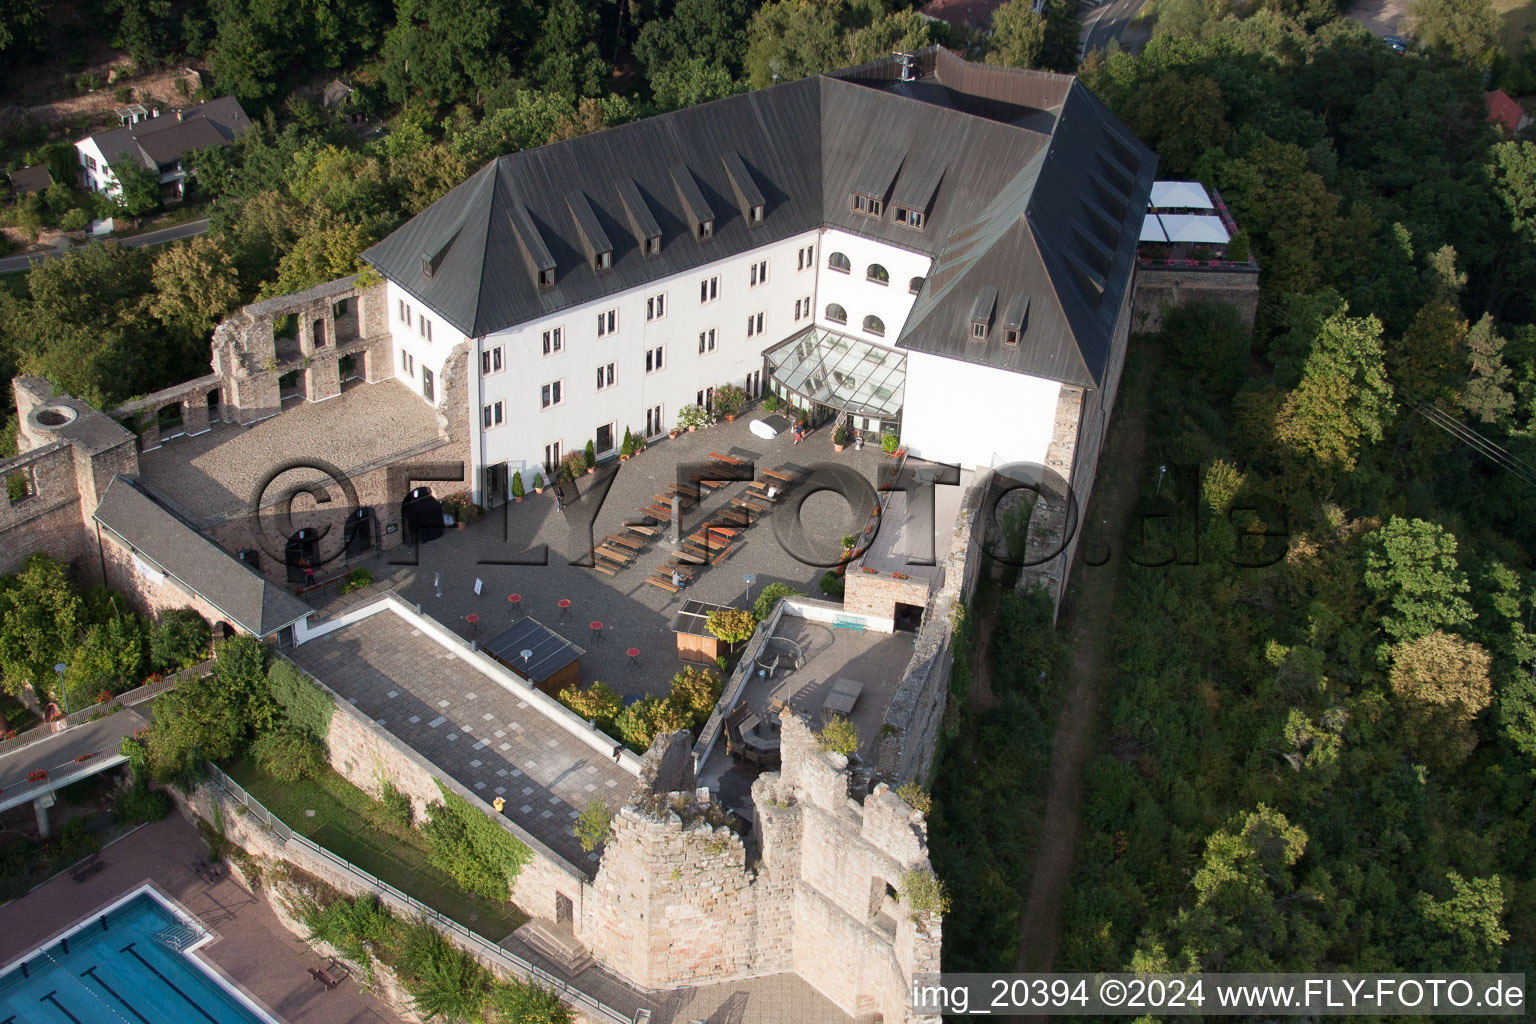 Aerial photograpy of Building the hostel Burg Altleiningen in the district Hoeningen in Altleiningen in the state Rhineland-Palatinate